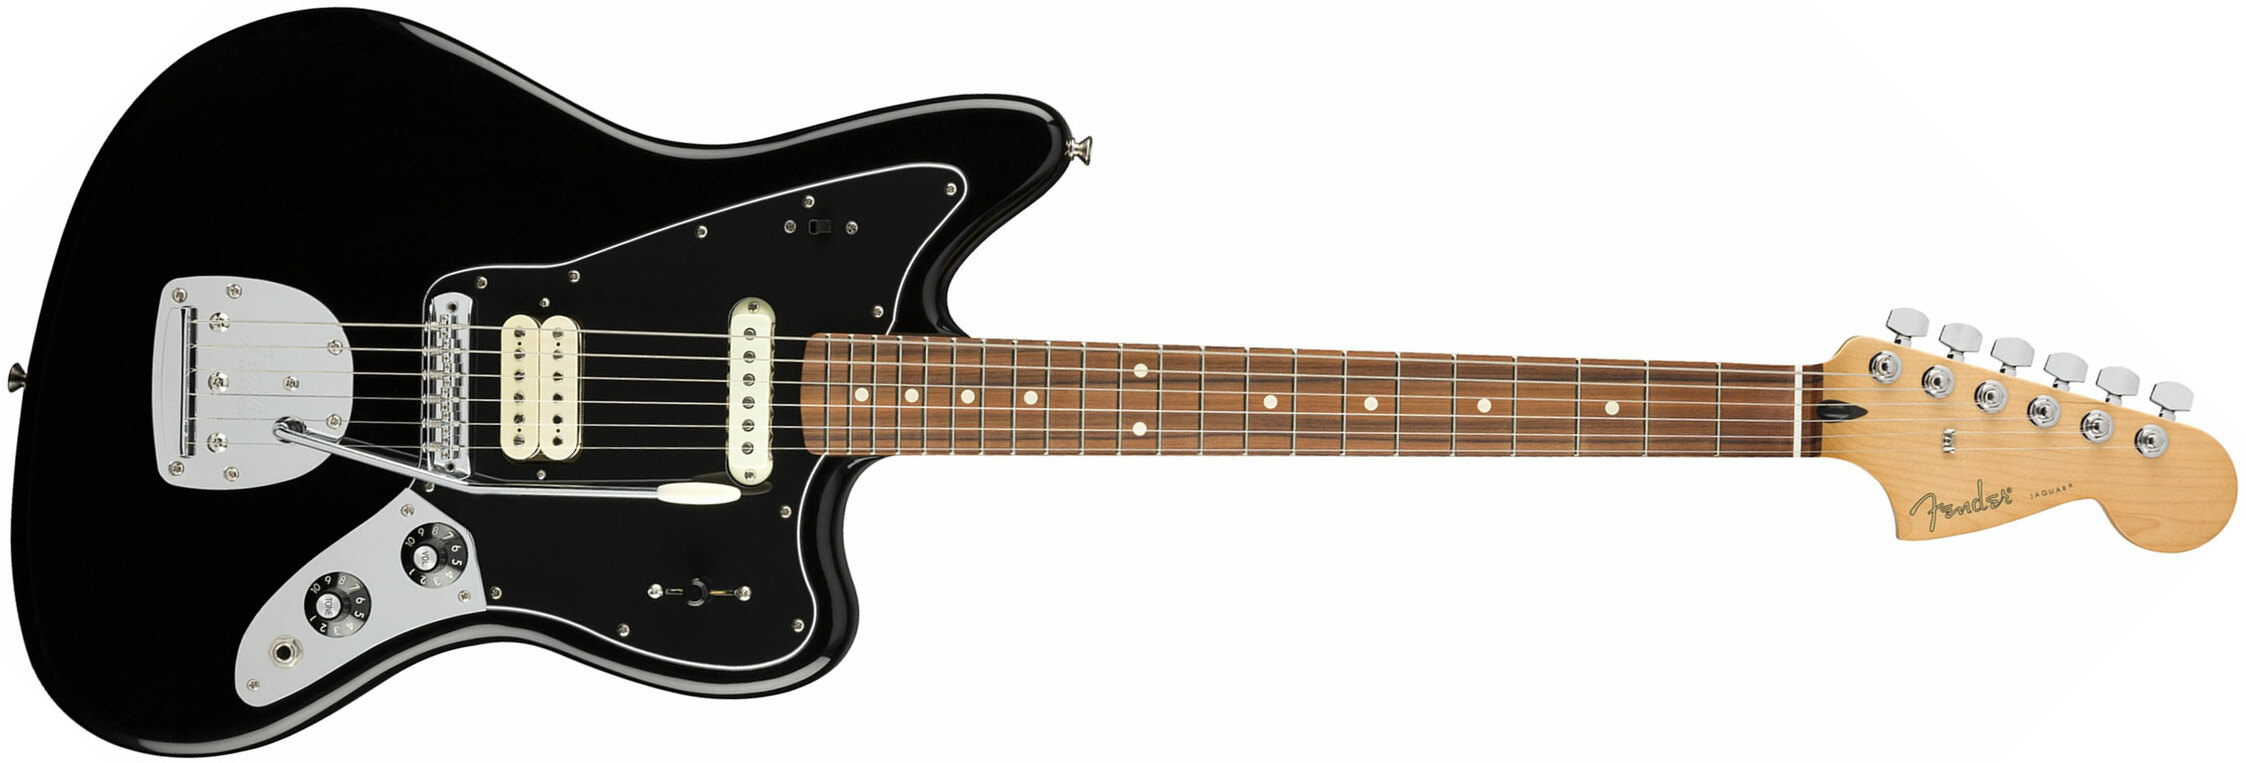 Fender Jaguar Player Mex Hs Pf - Black - Guitarra electrica retro rock - Main picture